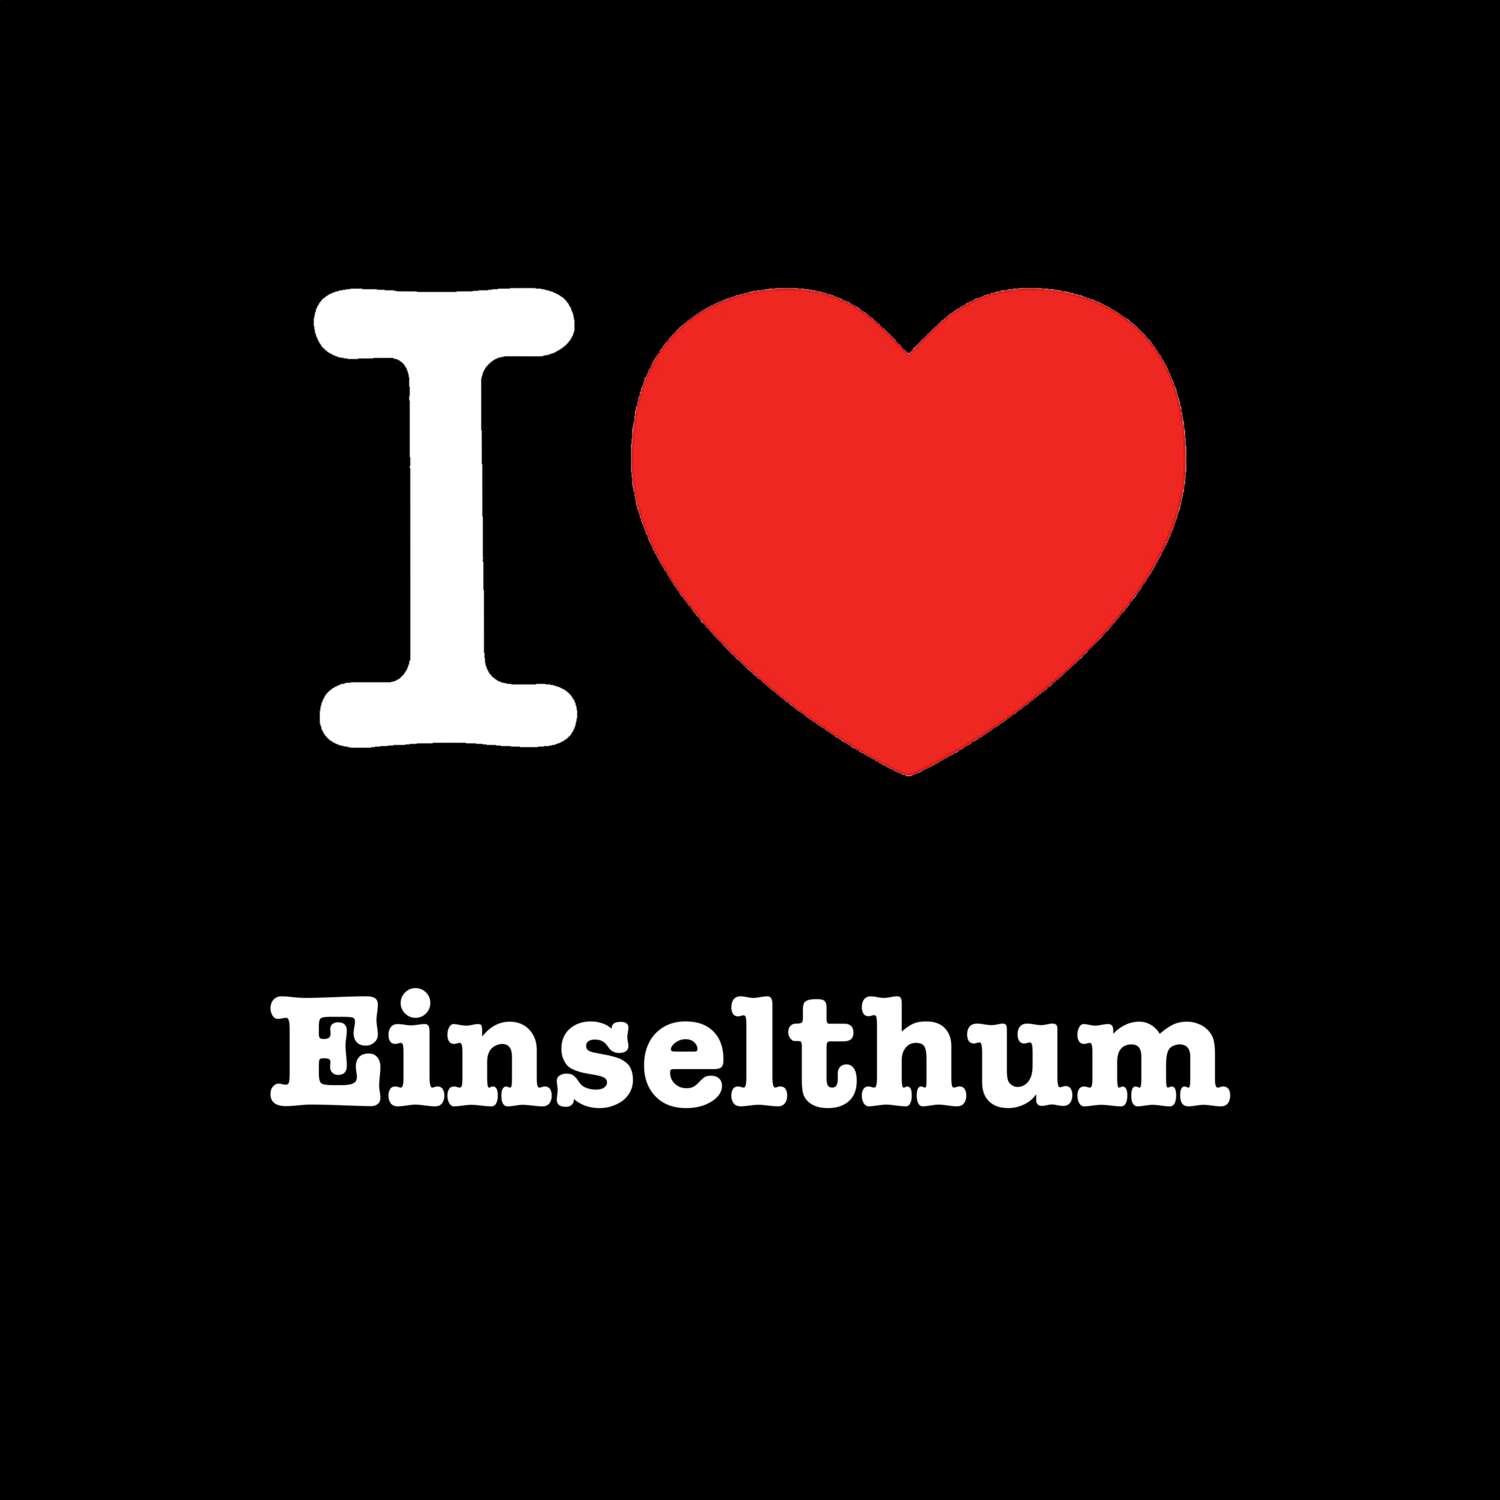 Einselthum T-Shirt »I love«